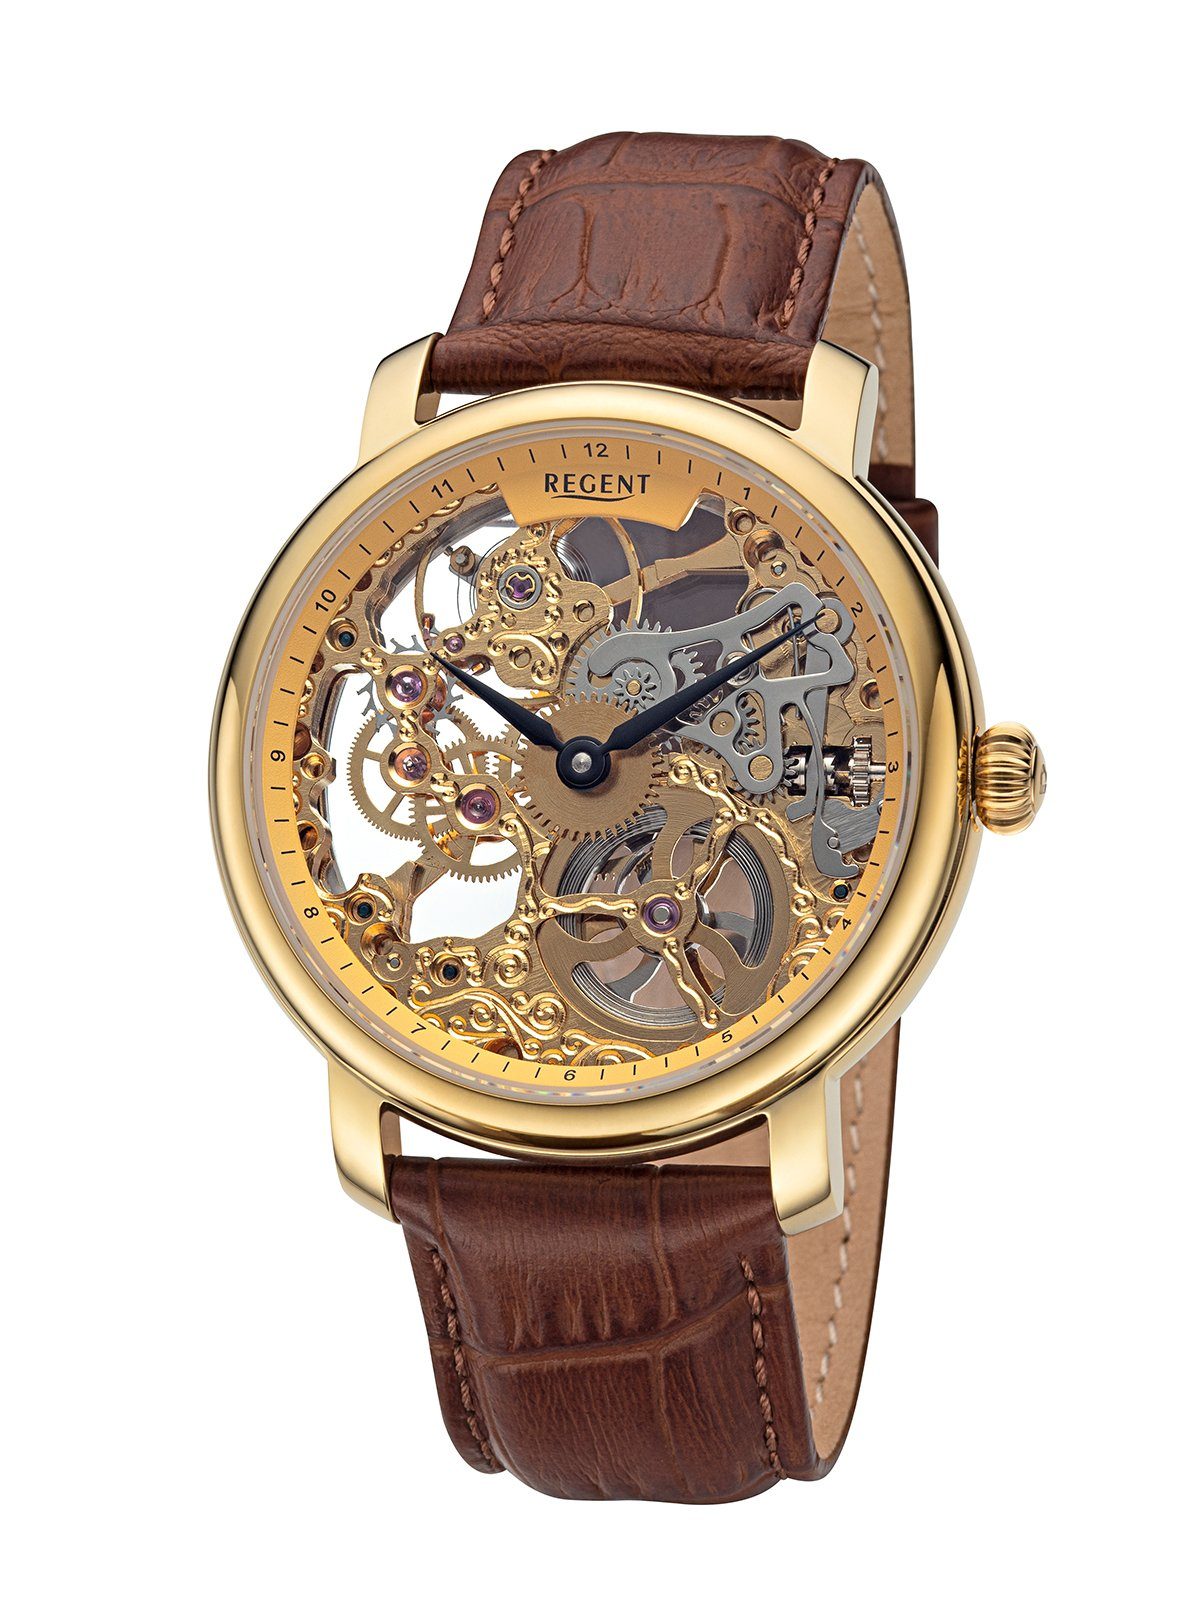 Regent Mechanische Uhr Handaufzug, Skelett-Uhrwerk, gold GM-2205, Made Germany Lederband in